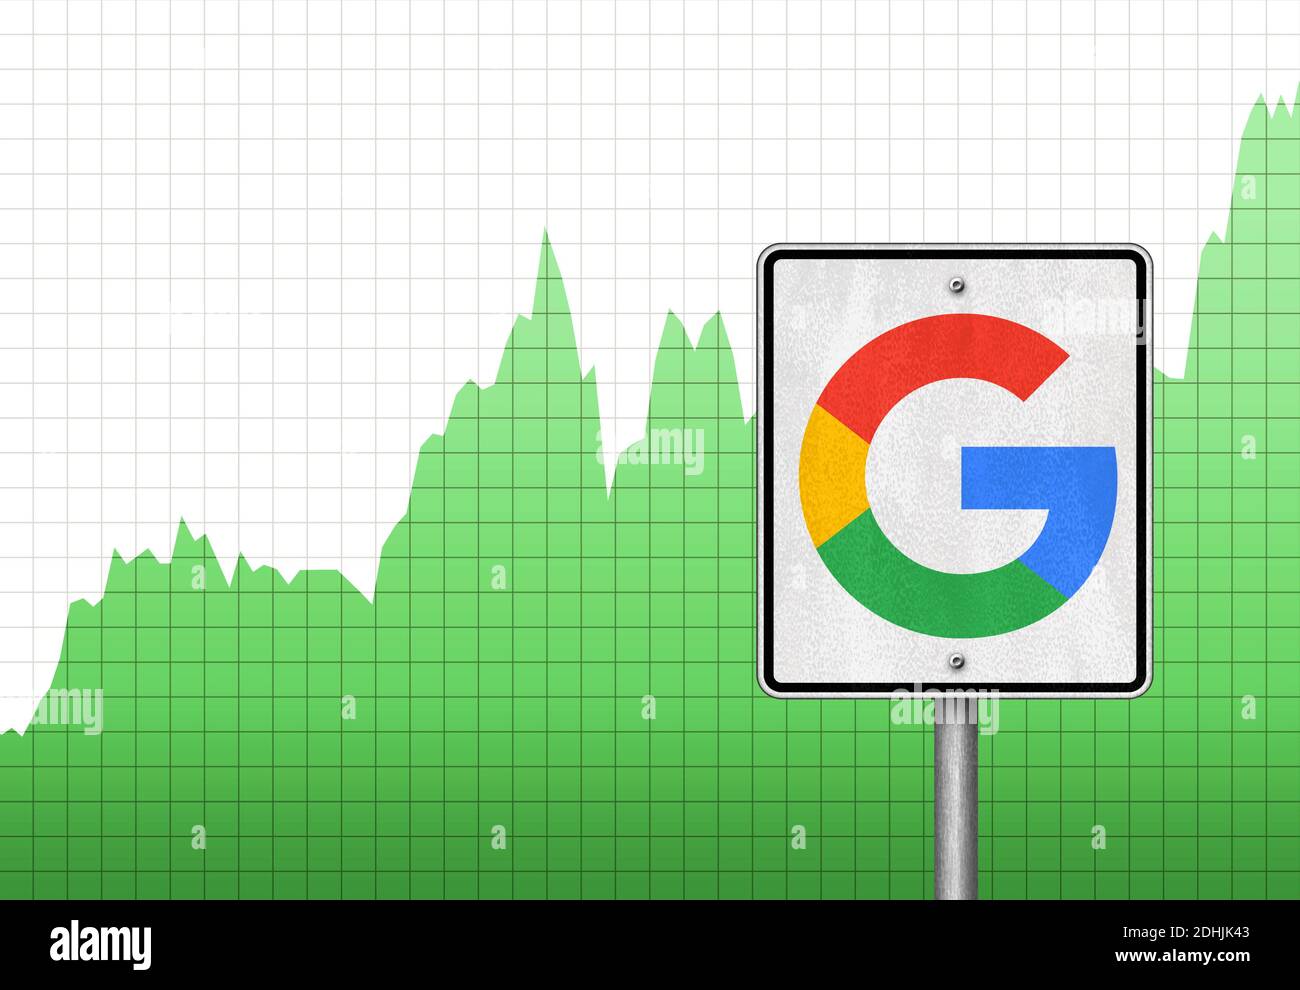 Google stock chart Stock Photo